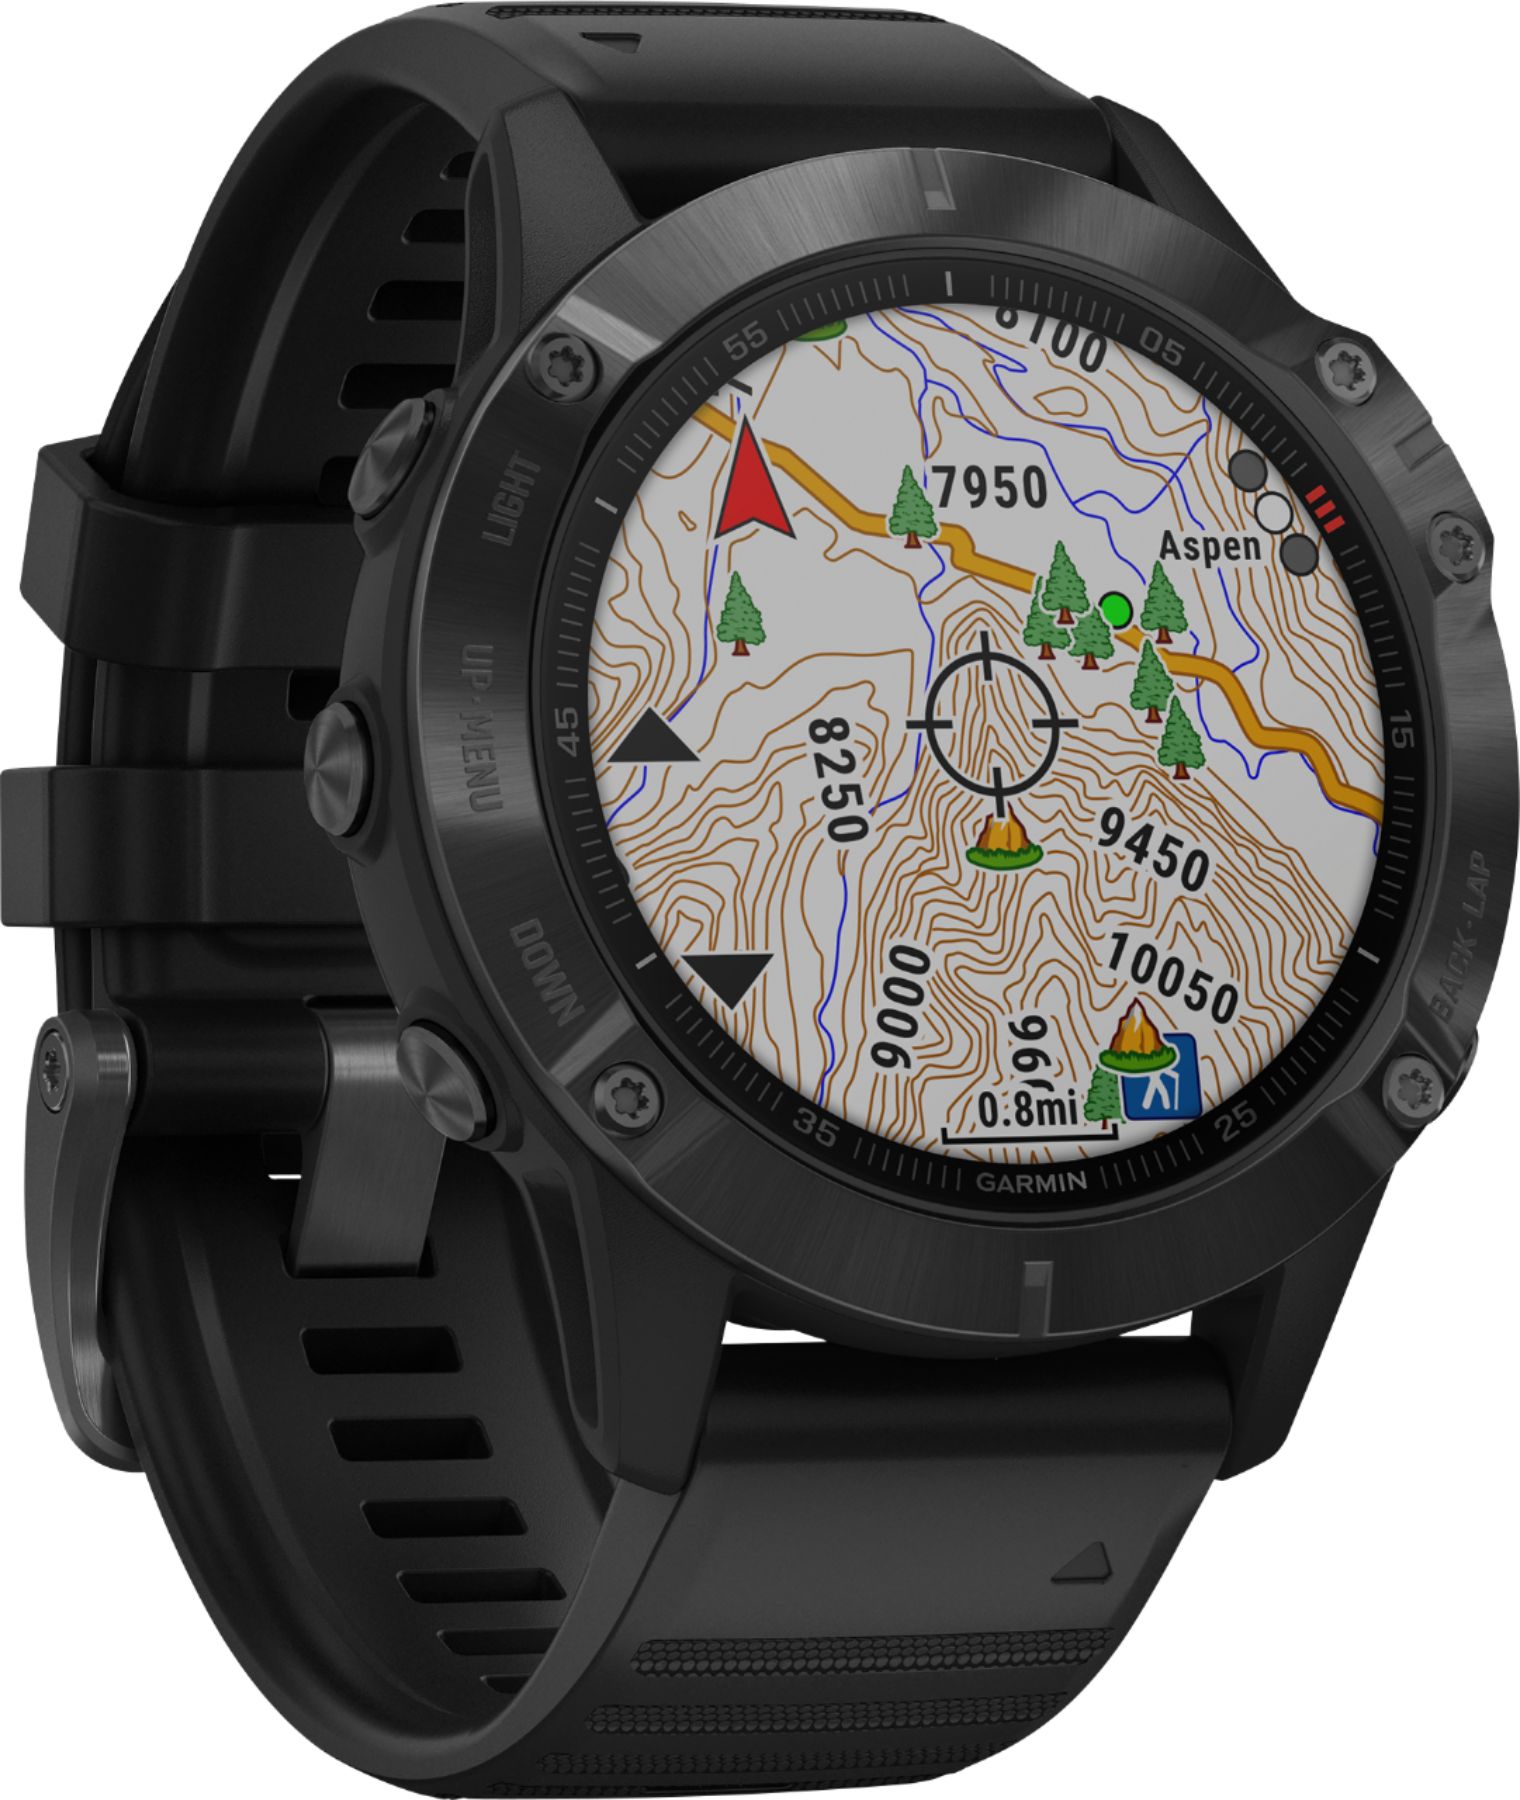 Angle View: Garmin - fēnix 6 Pro GPS Smartwatch 47mm Fiber-Reinforced Polymer - Black